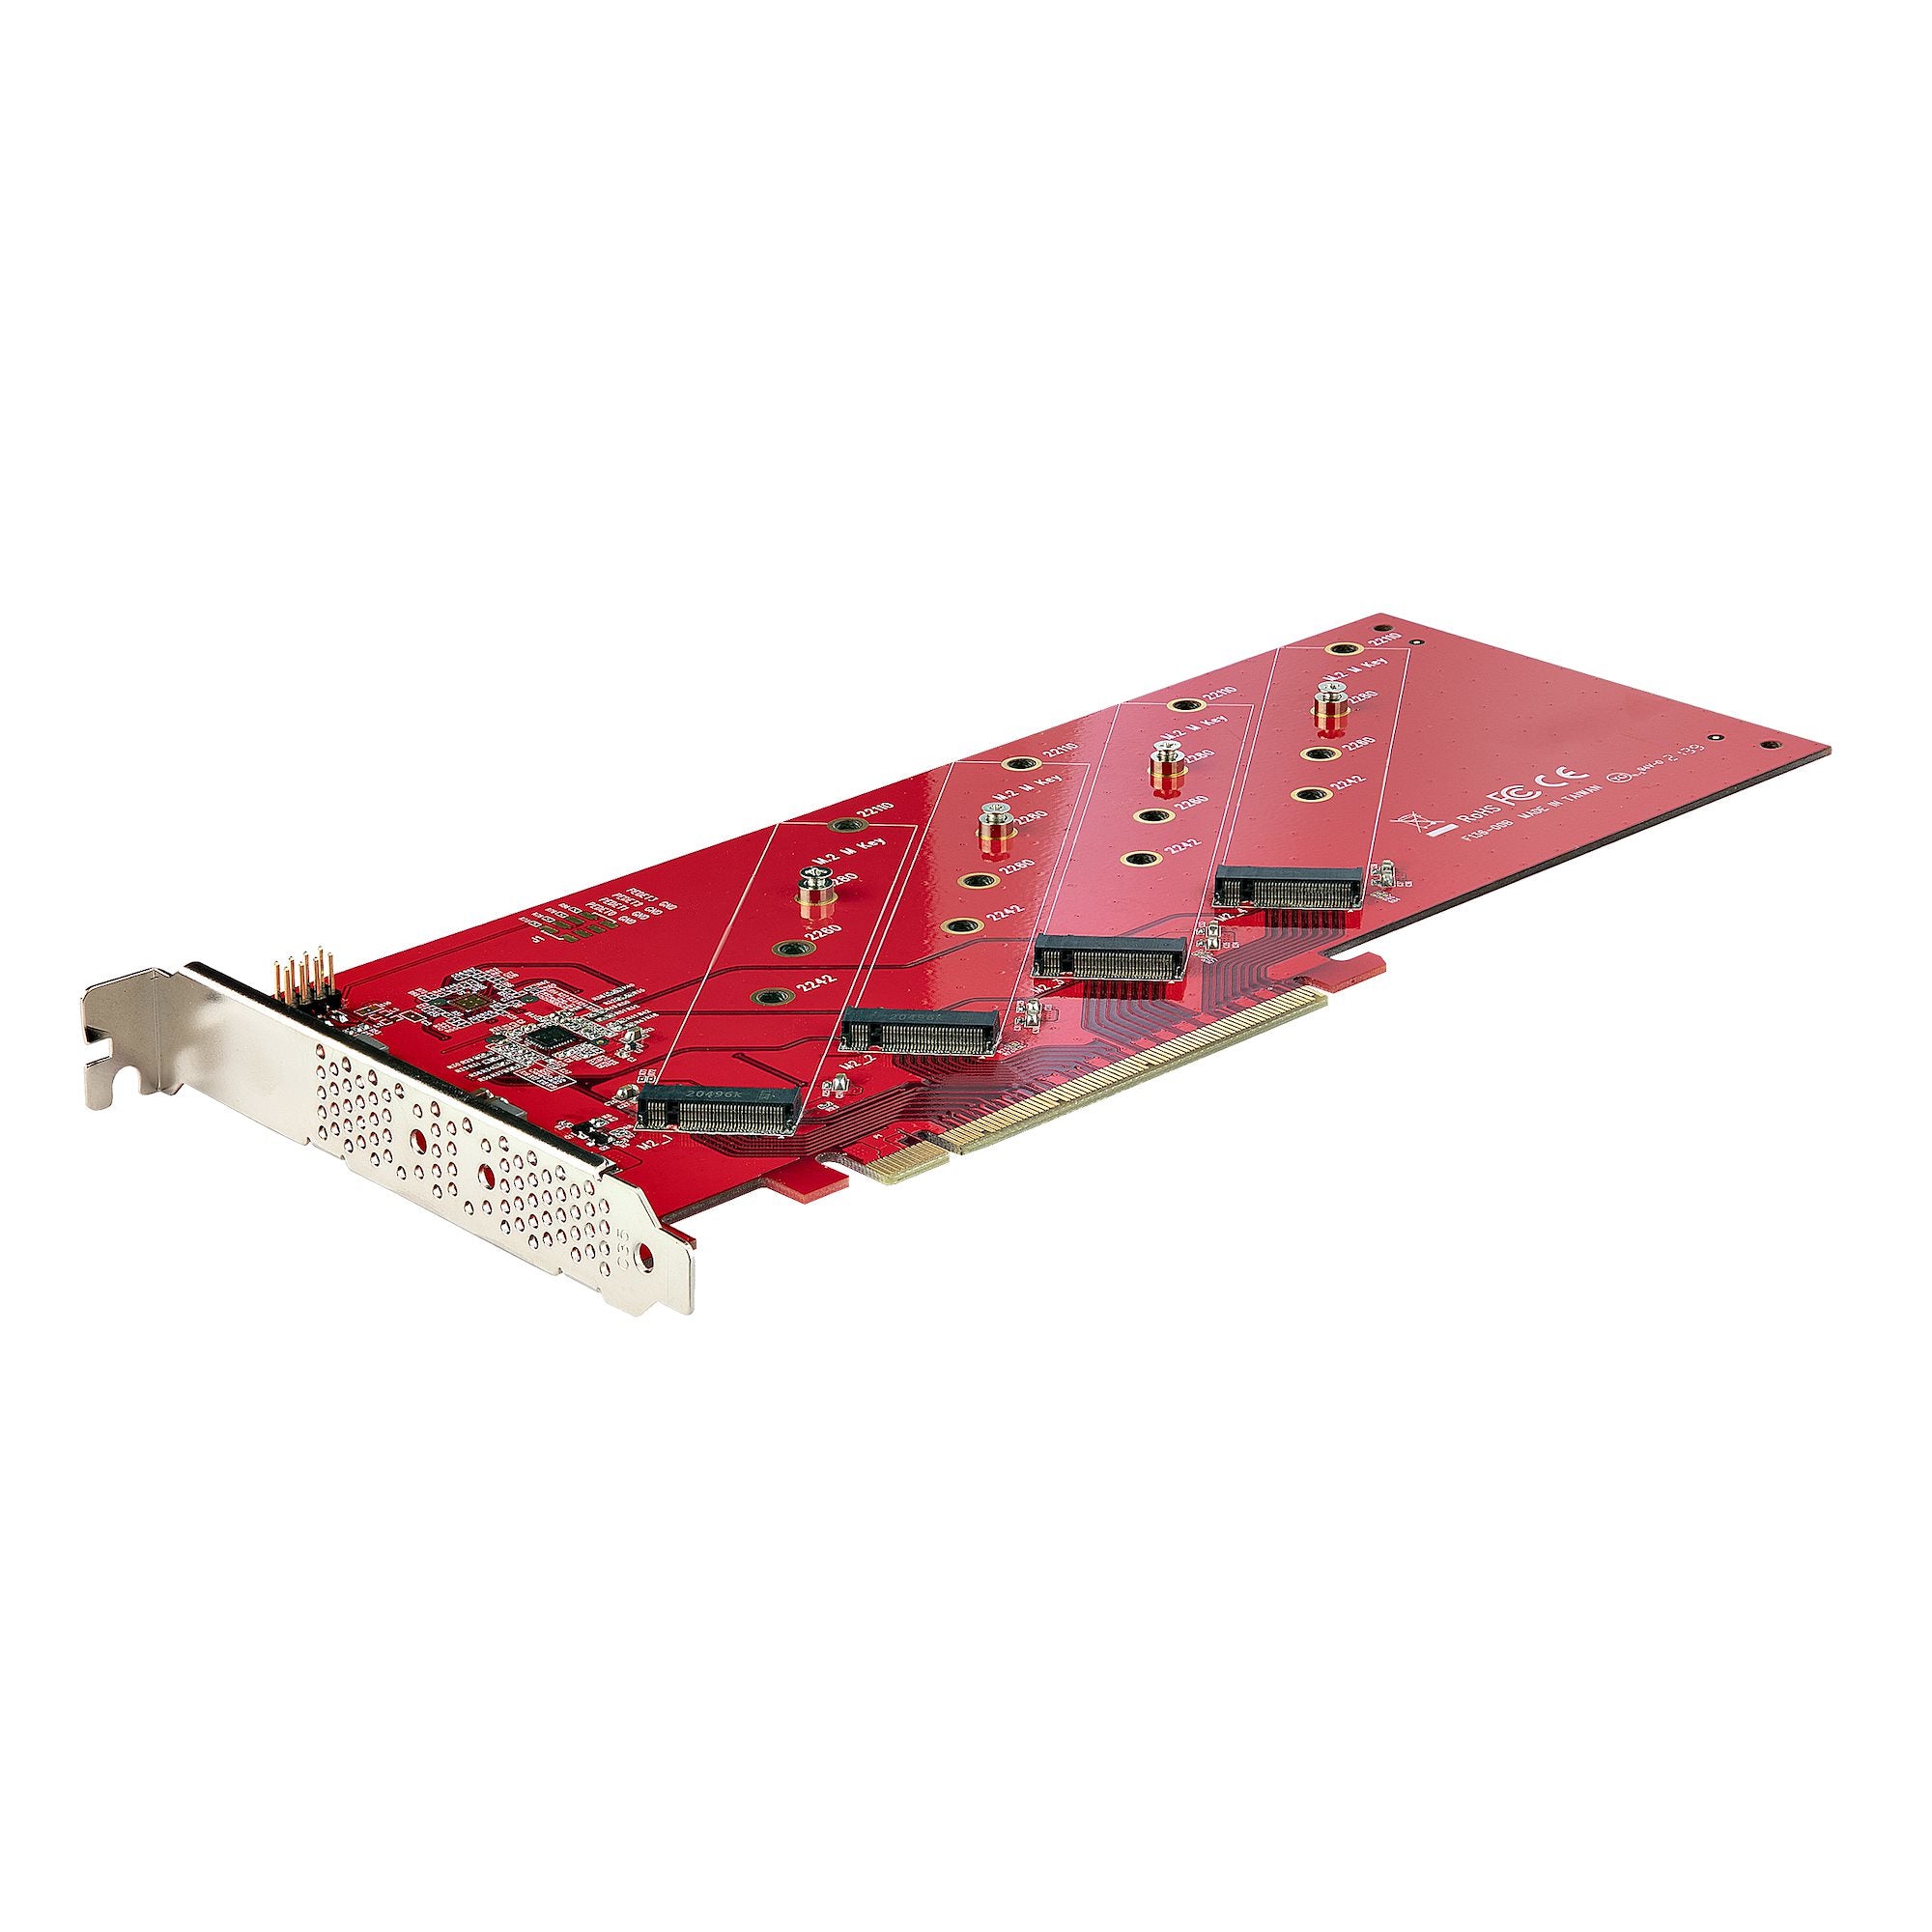 Quad M.2 PCIe Adapter Card